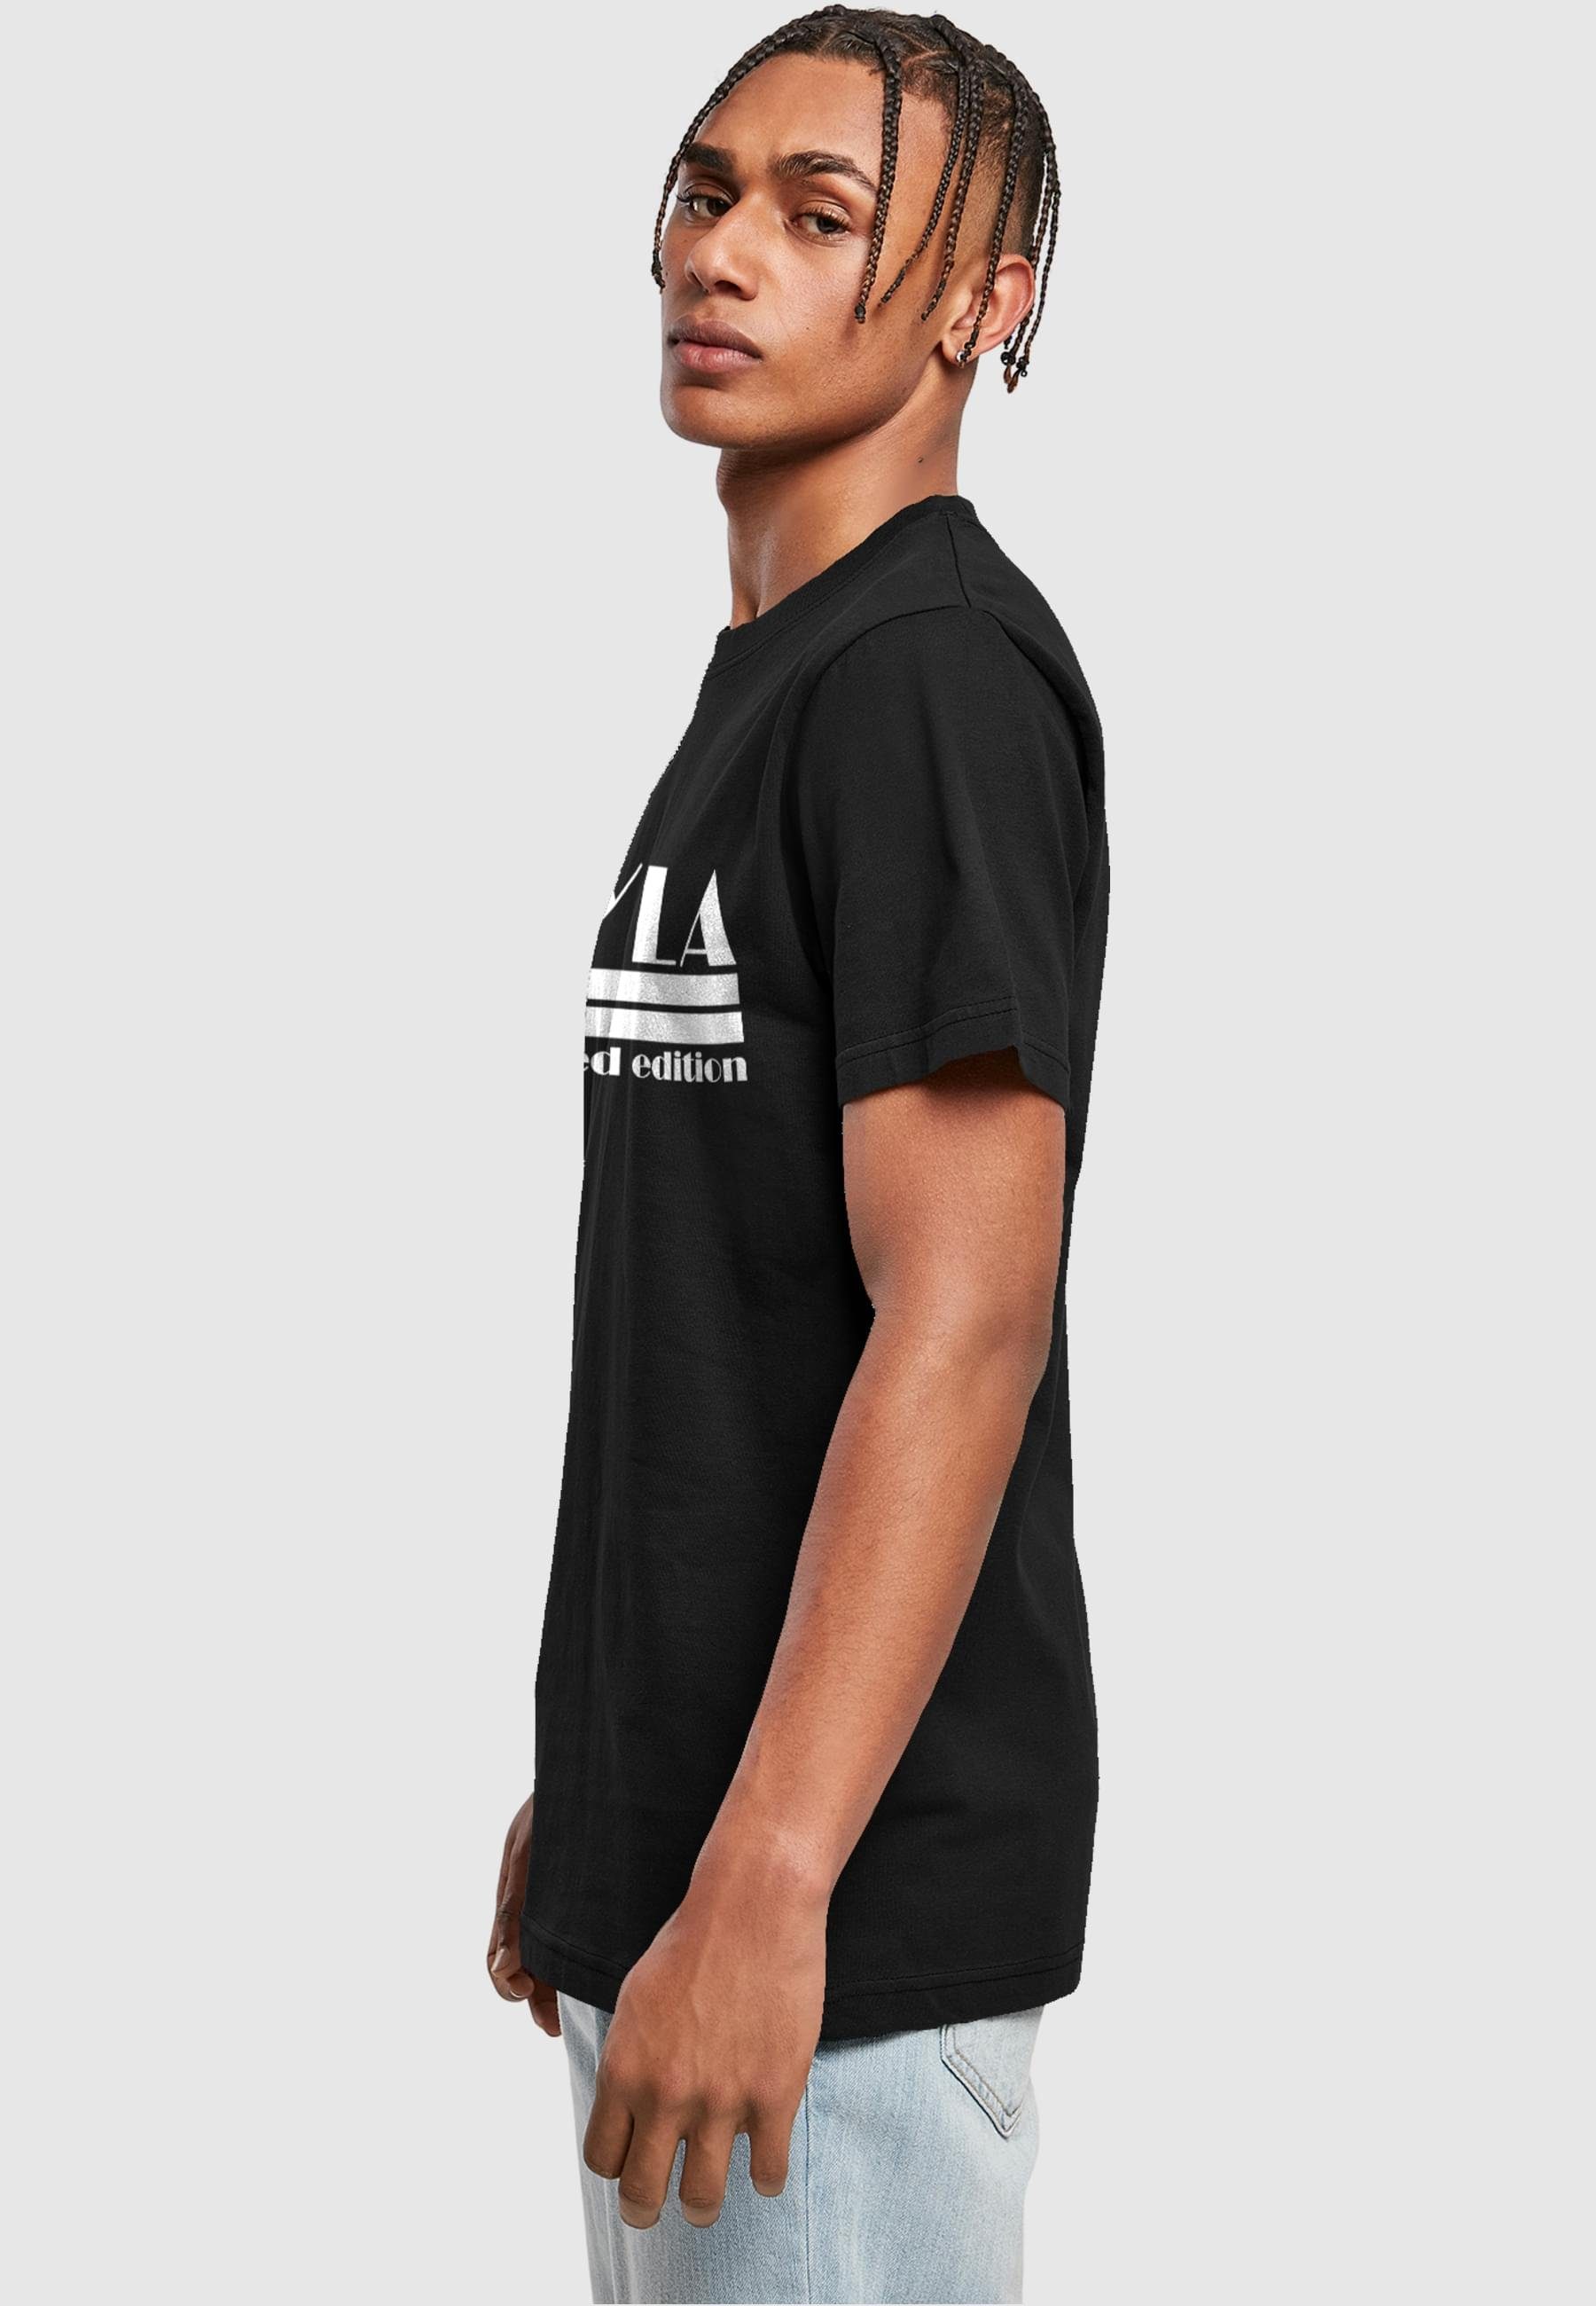 Herren X Merchcode black Edition T-Shirt Layla - Limited (1-tlg) T-Shirt